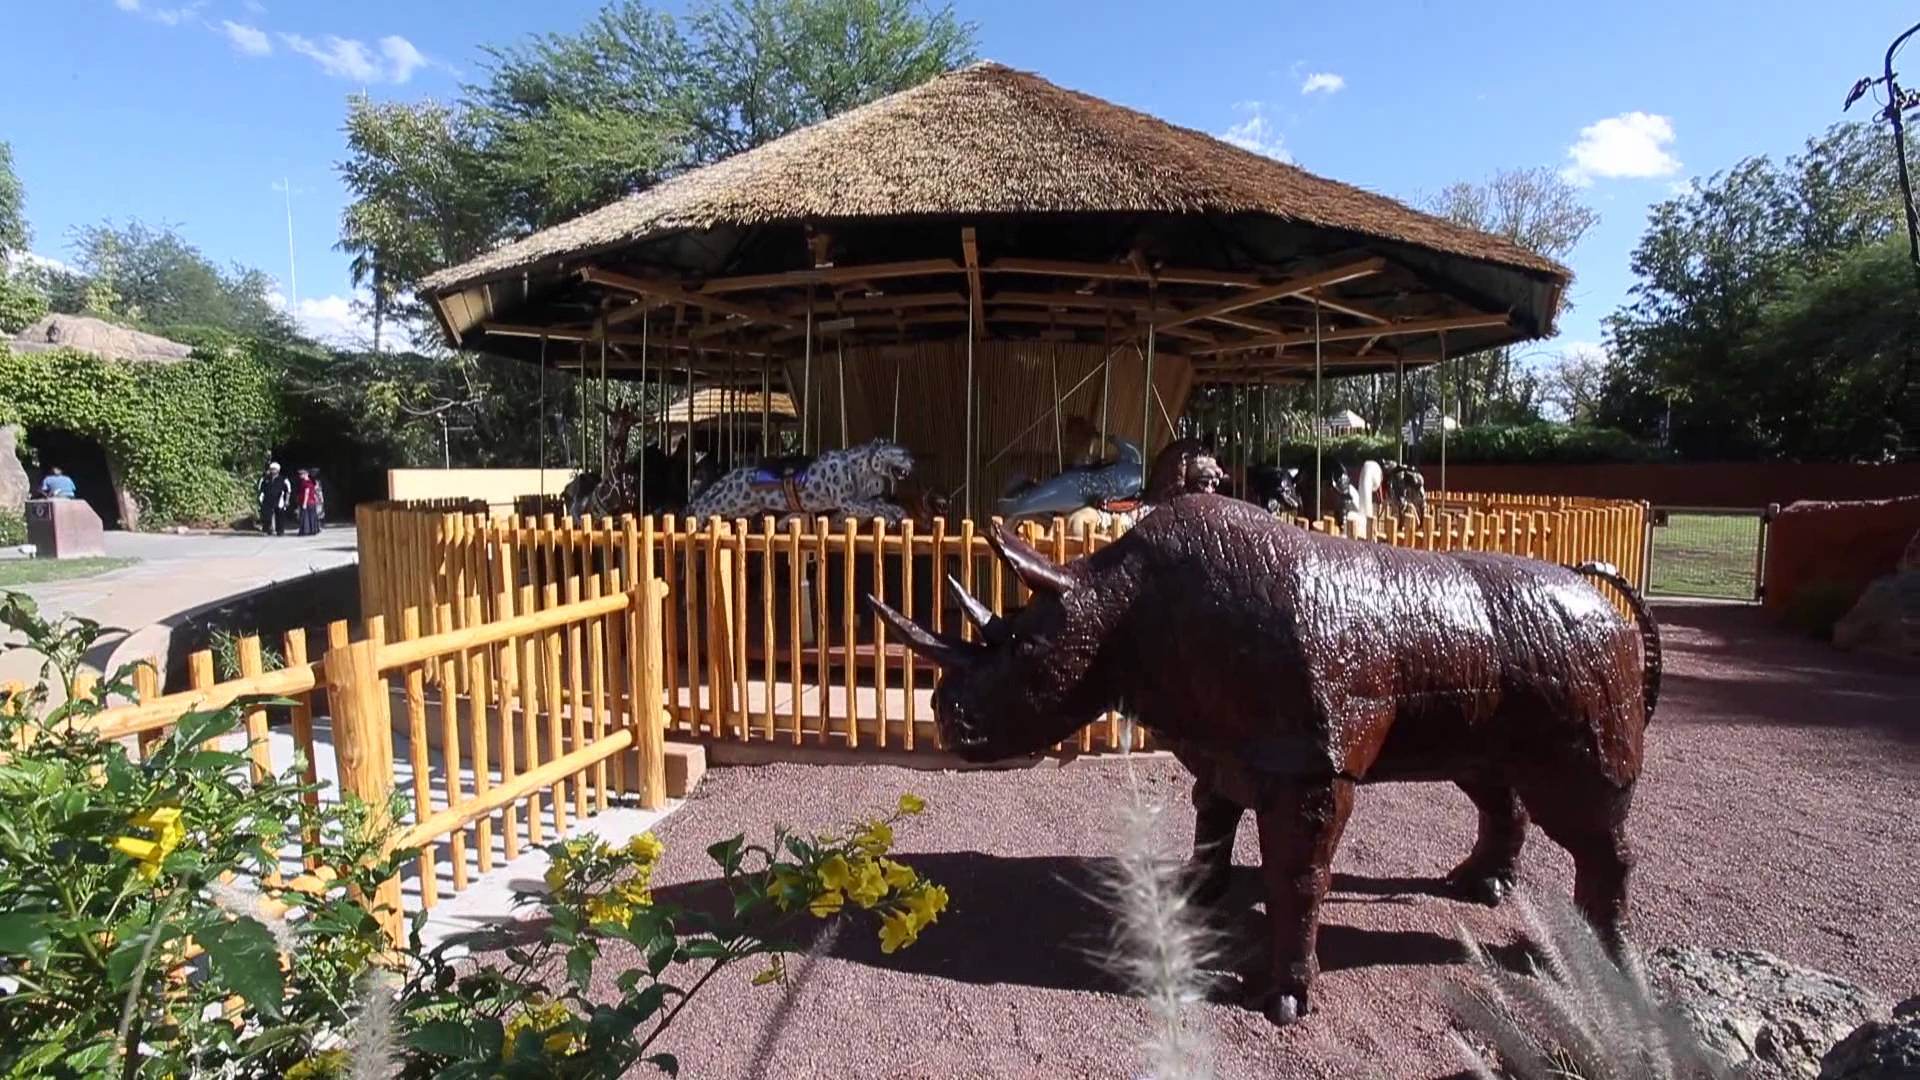 Reid Park Zoo in Tucson, AZ.